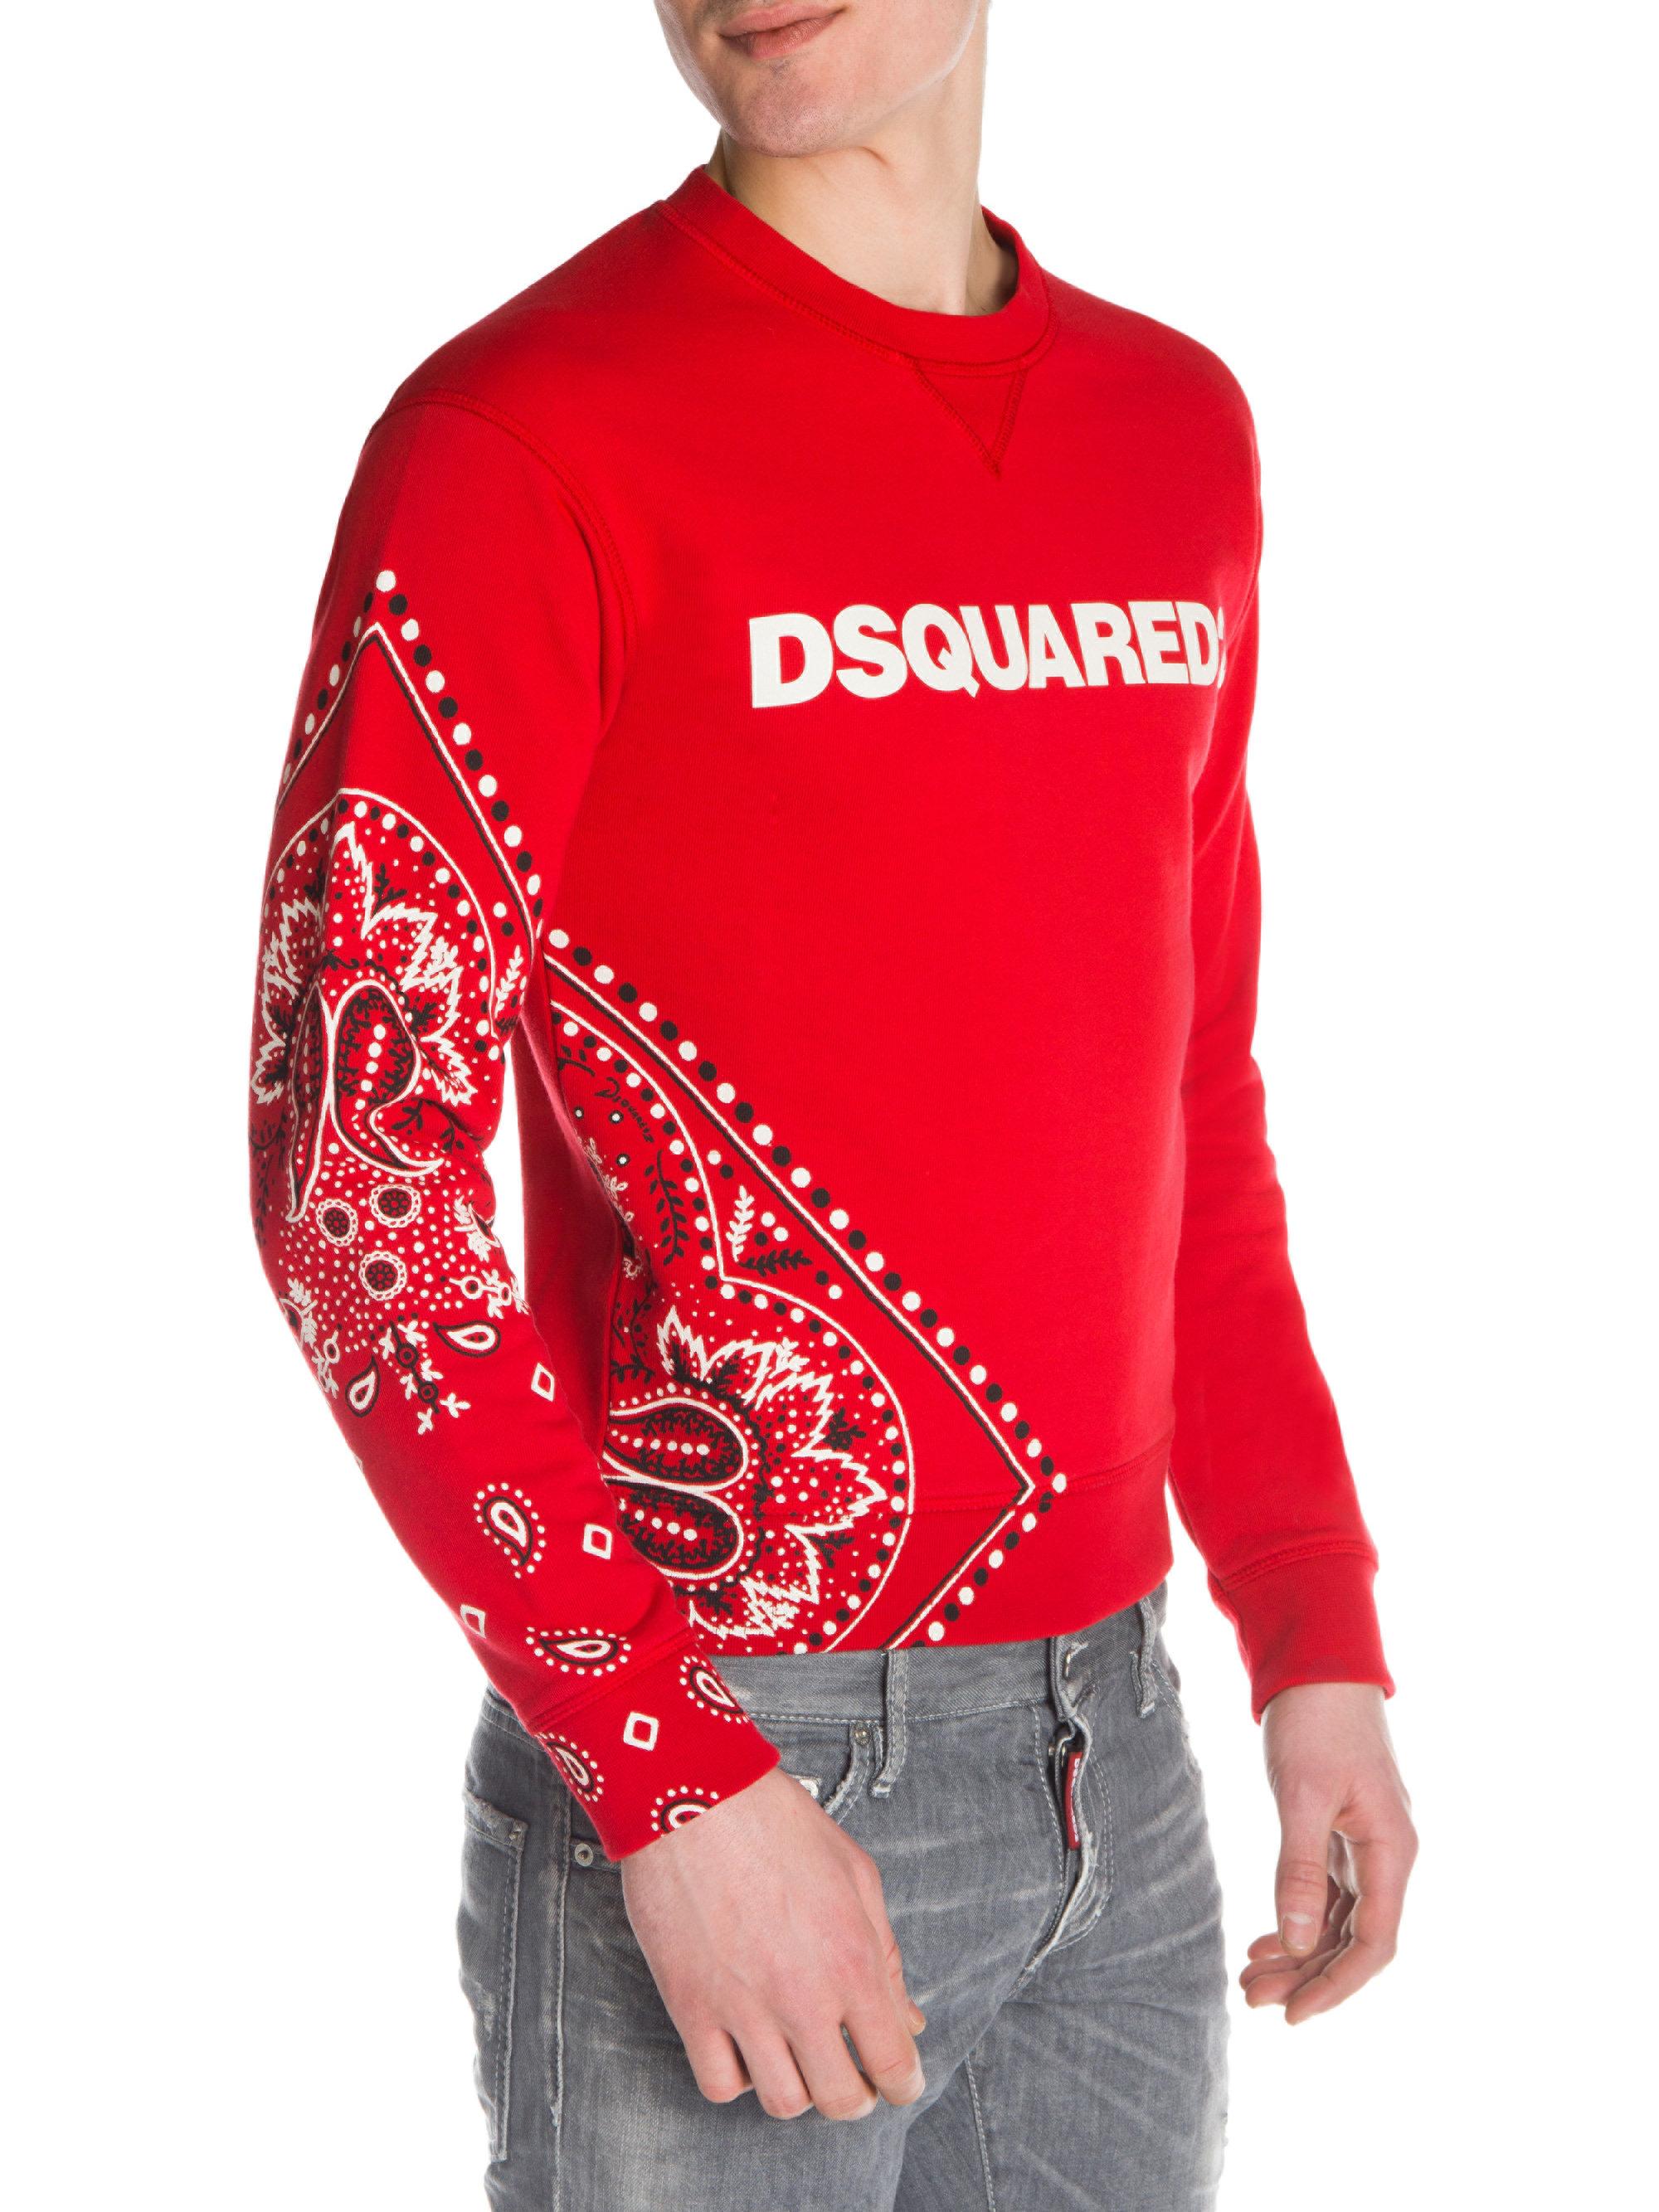 dsquared2 bandana sweatshirt Off 61% - www.loverethymno.com